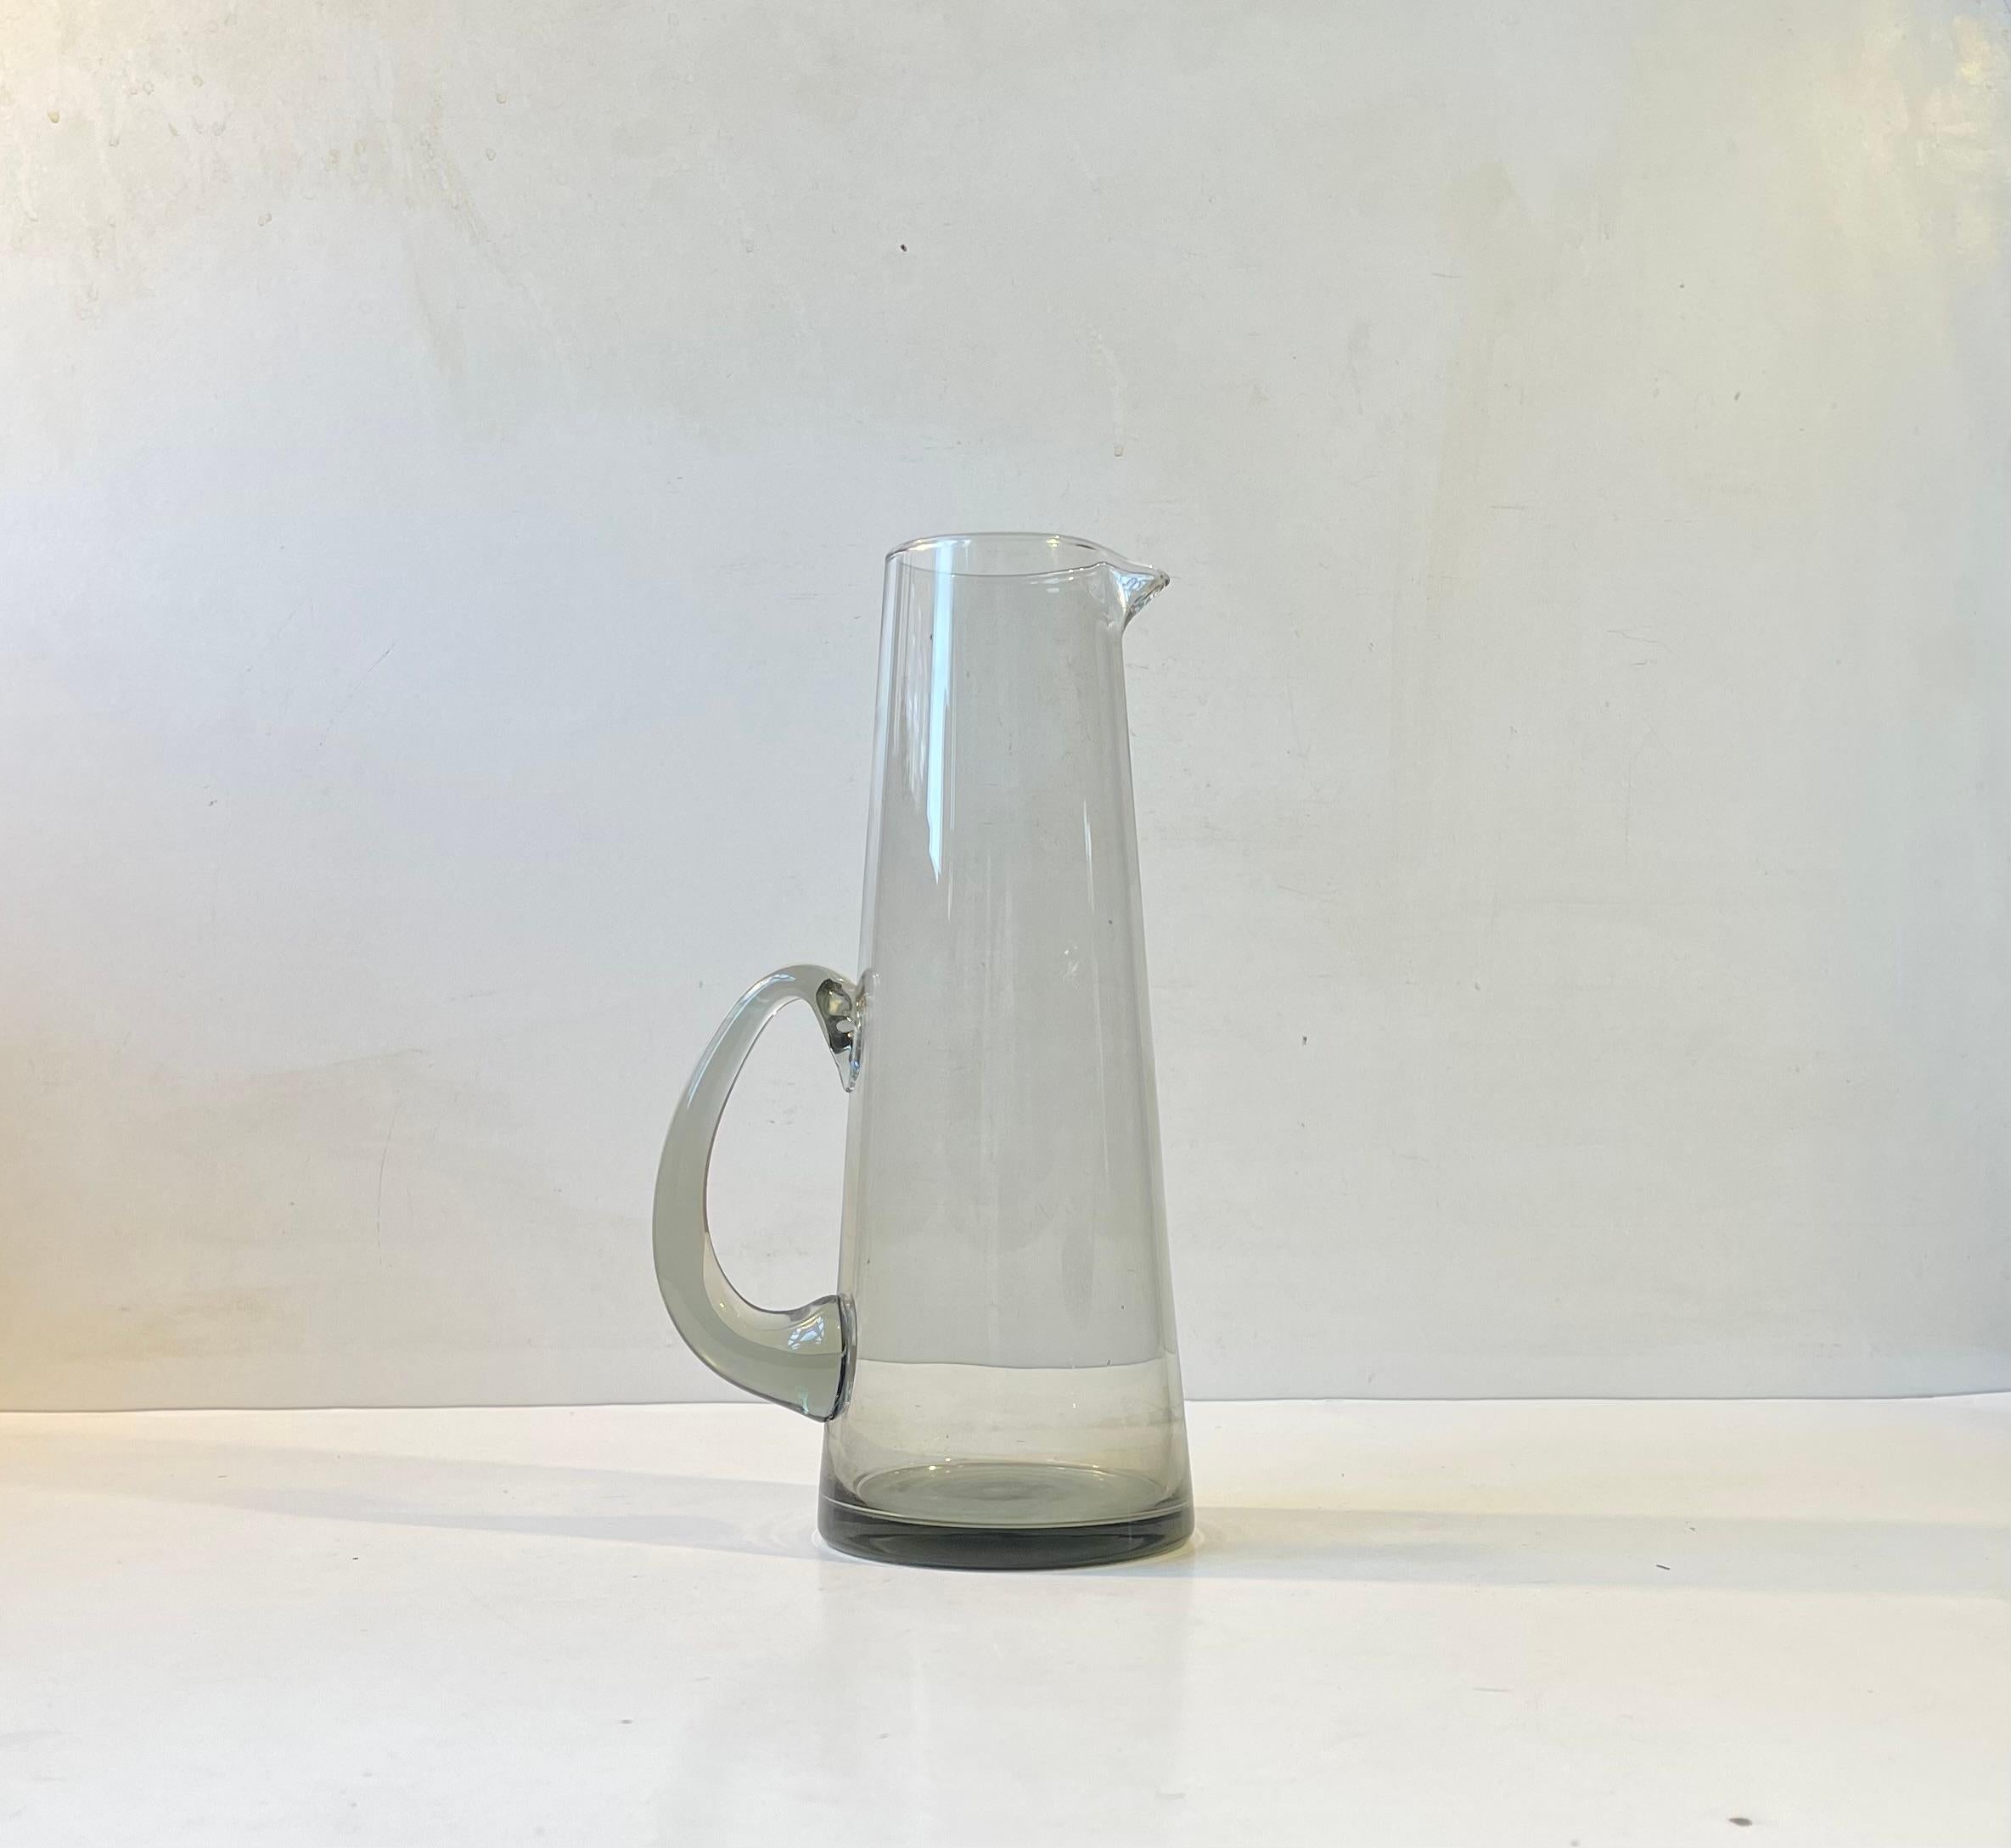 Elegant hand-blown pitcher in grey smoke glass designed by per Lütken circa 1960 and made Holmegaard in Denmark. Measurements: H: 25 cm, Diameter: 9.5 cm (base). Capacity: 0,7 liter.